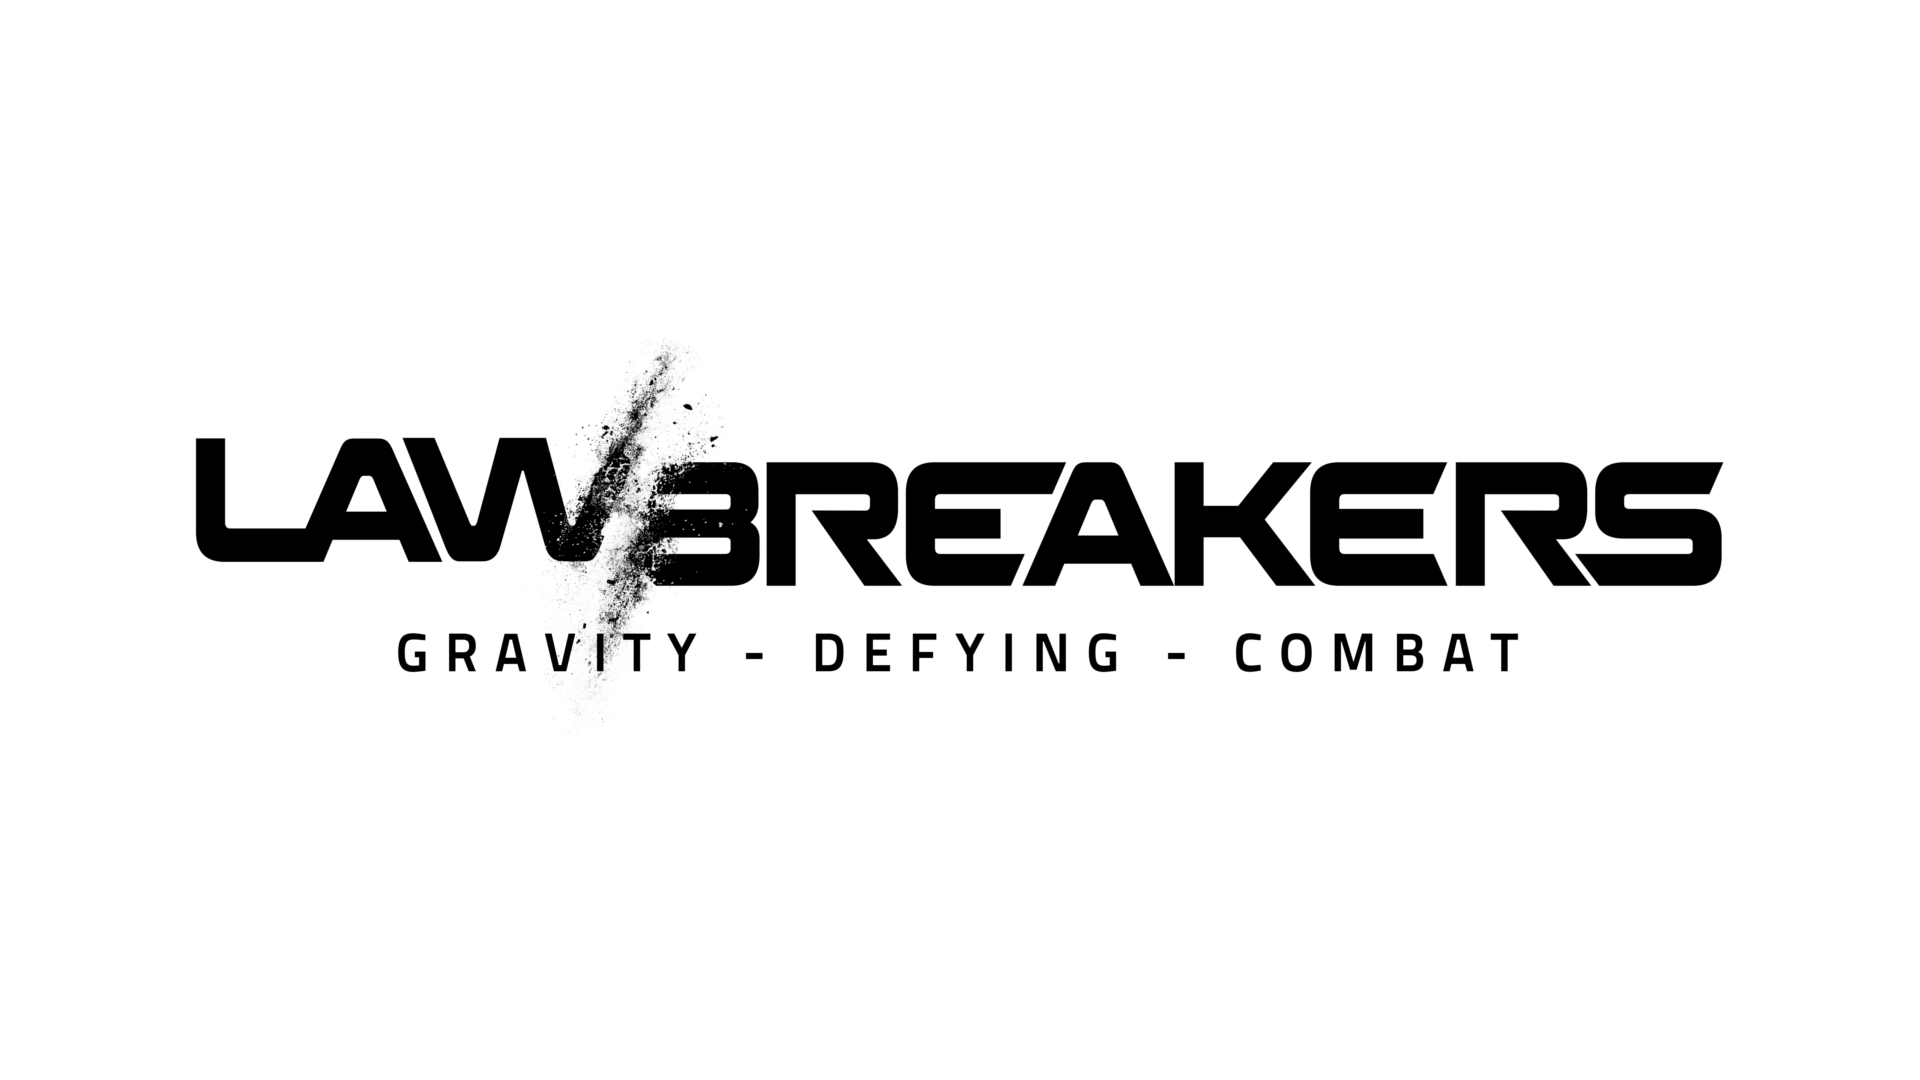 Video Game LawBreakers HD Wallpaper | Background Image